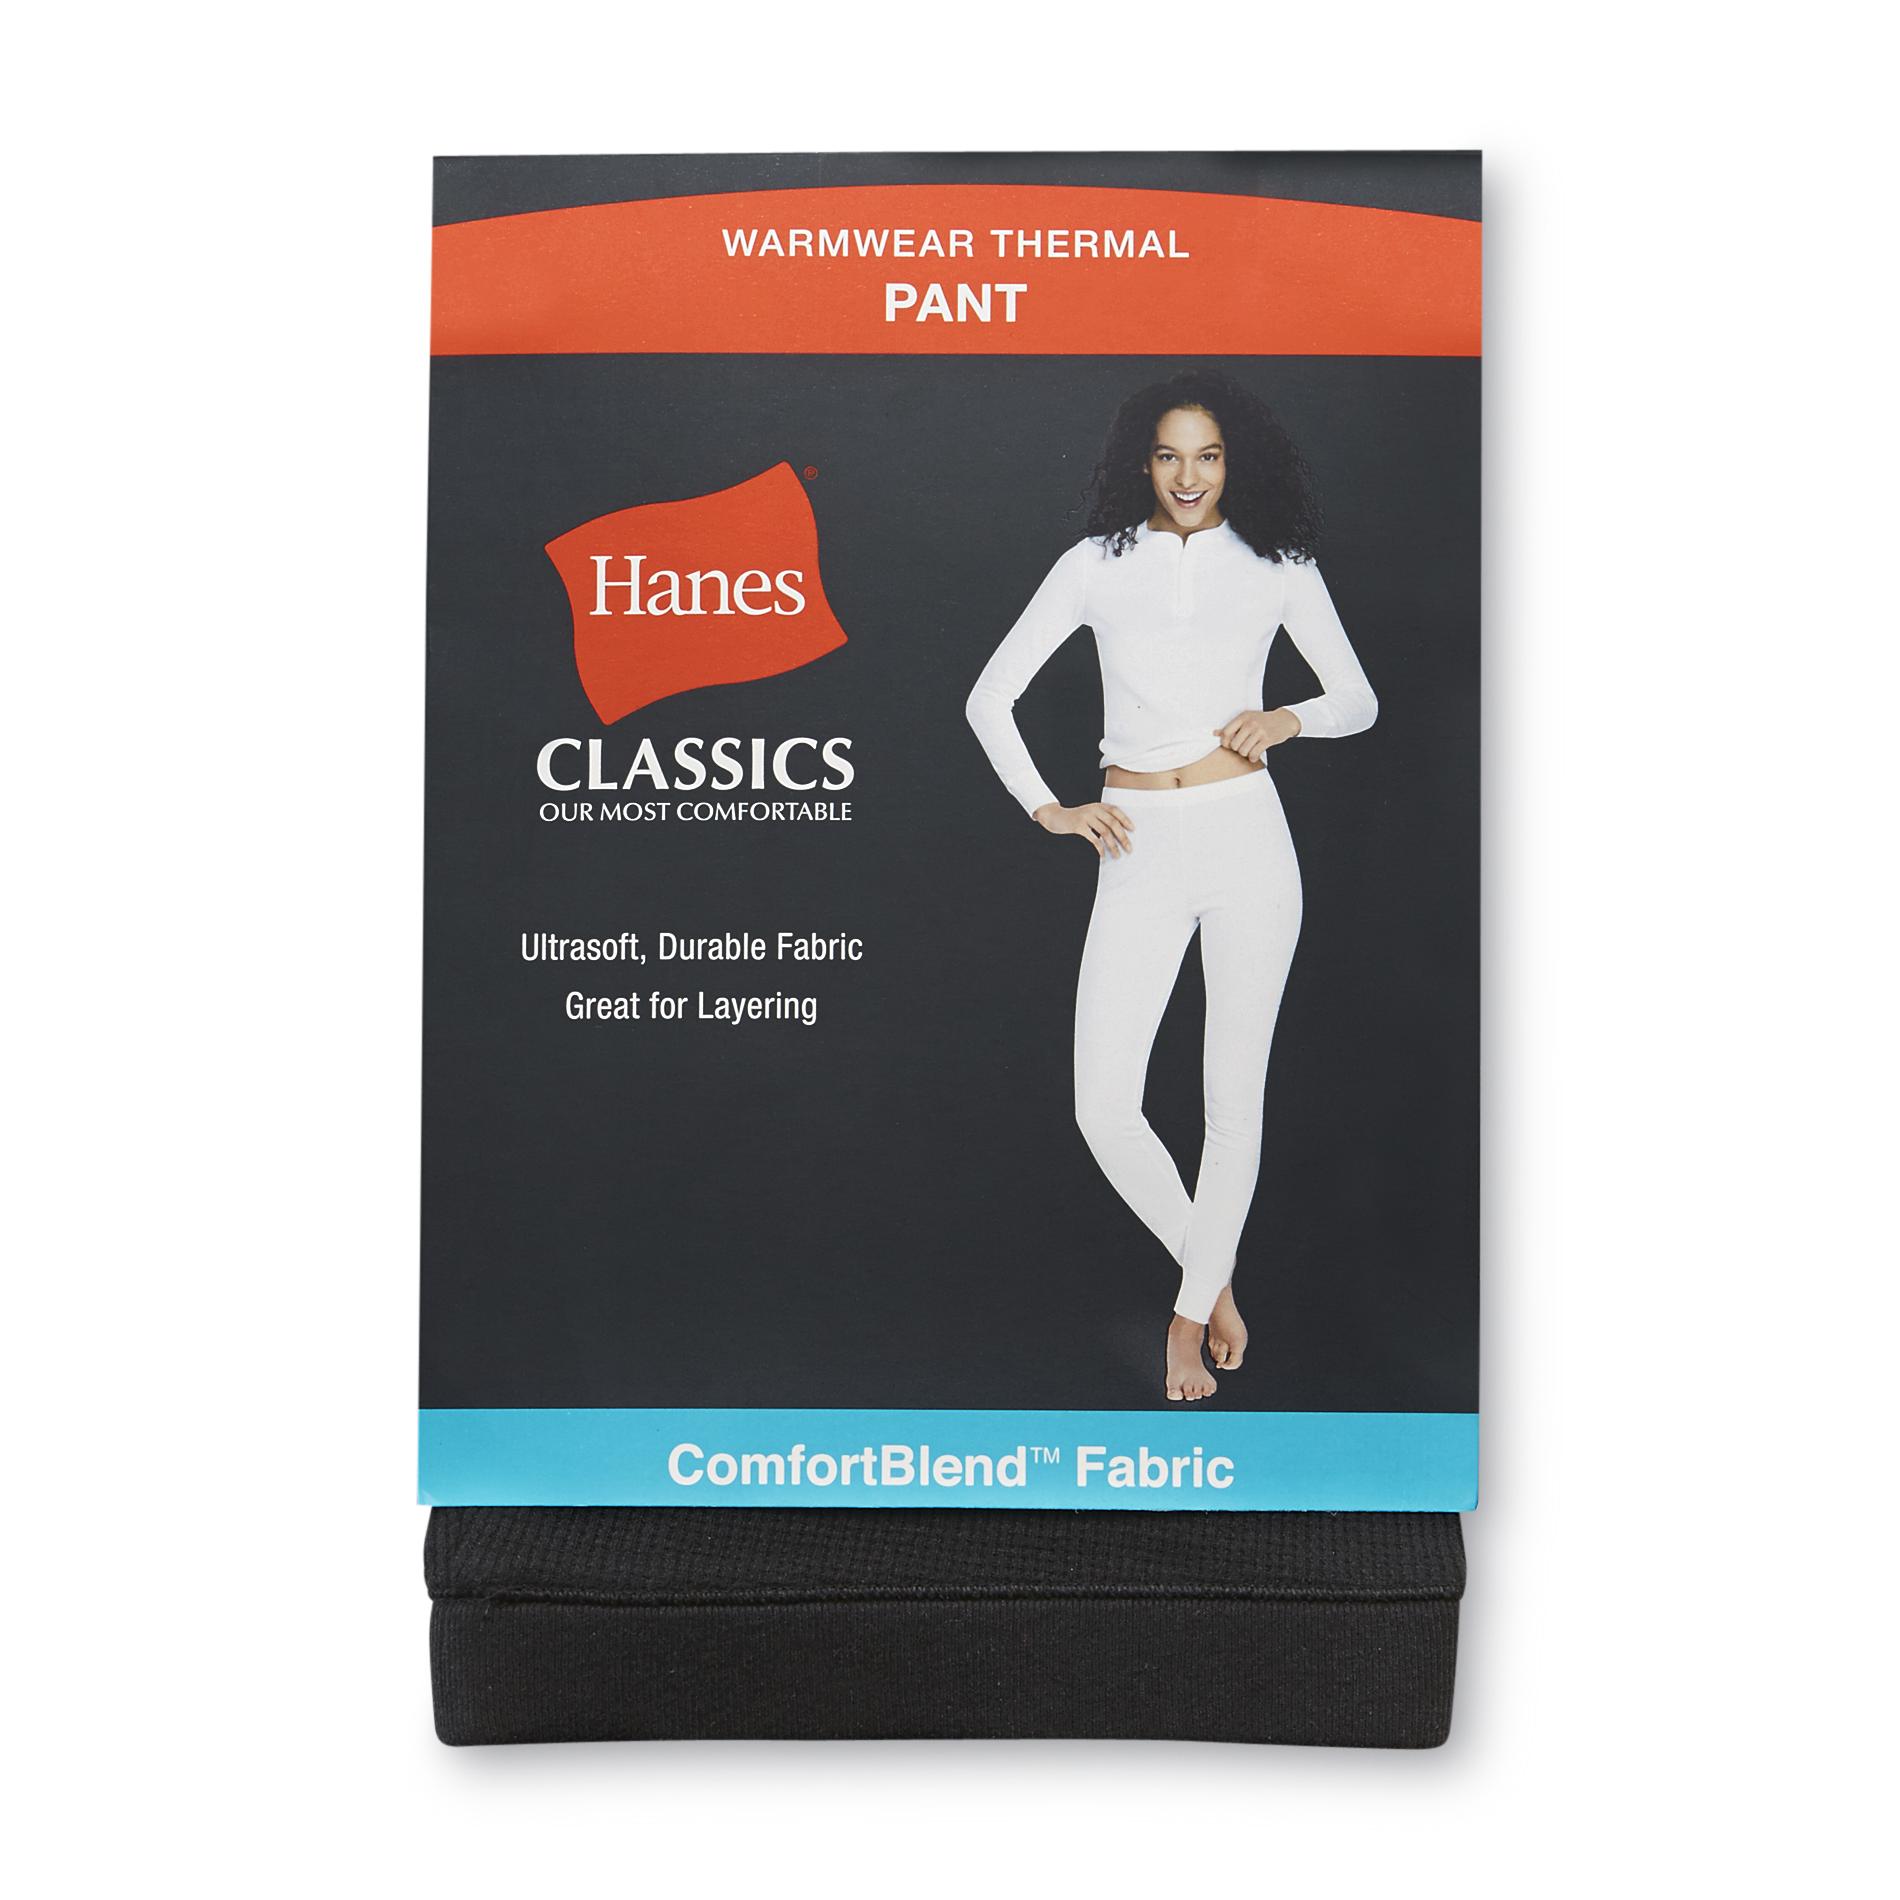 Hanes Women's ComfortBlend Thermal Underwear Pants